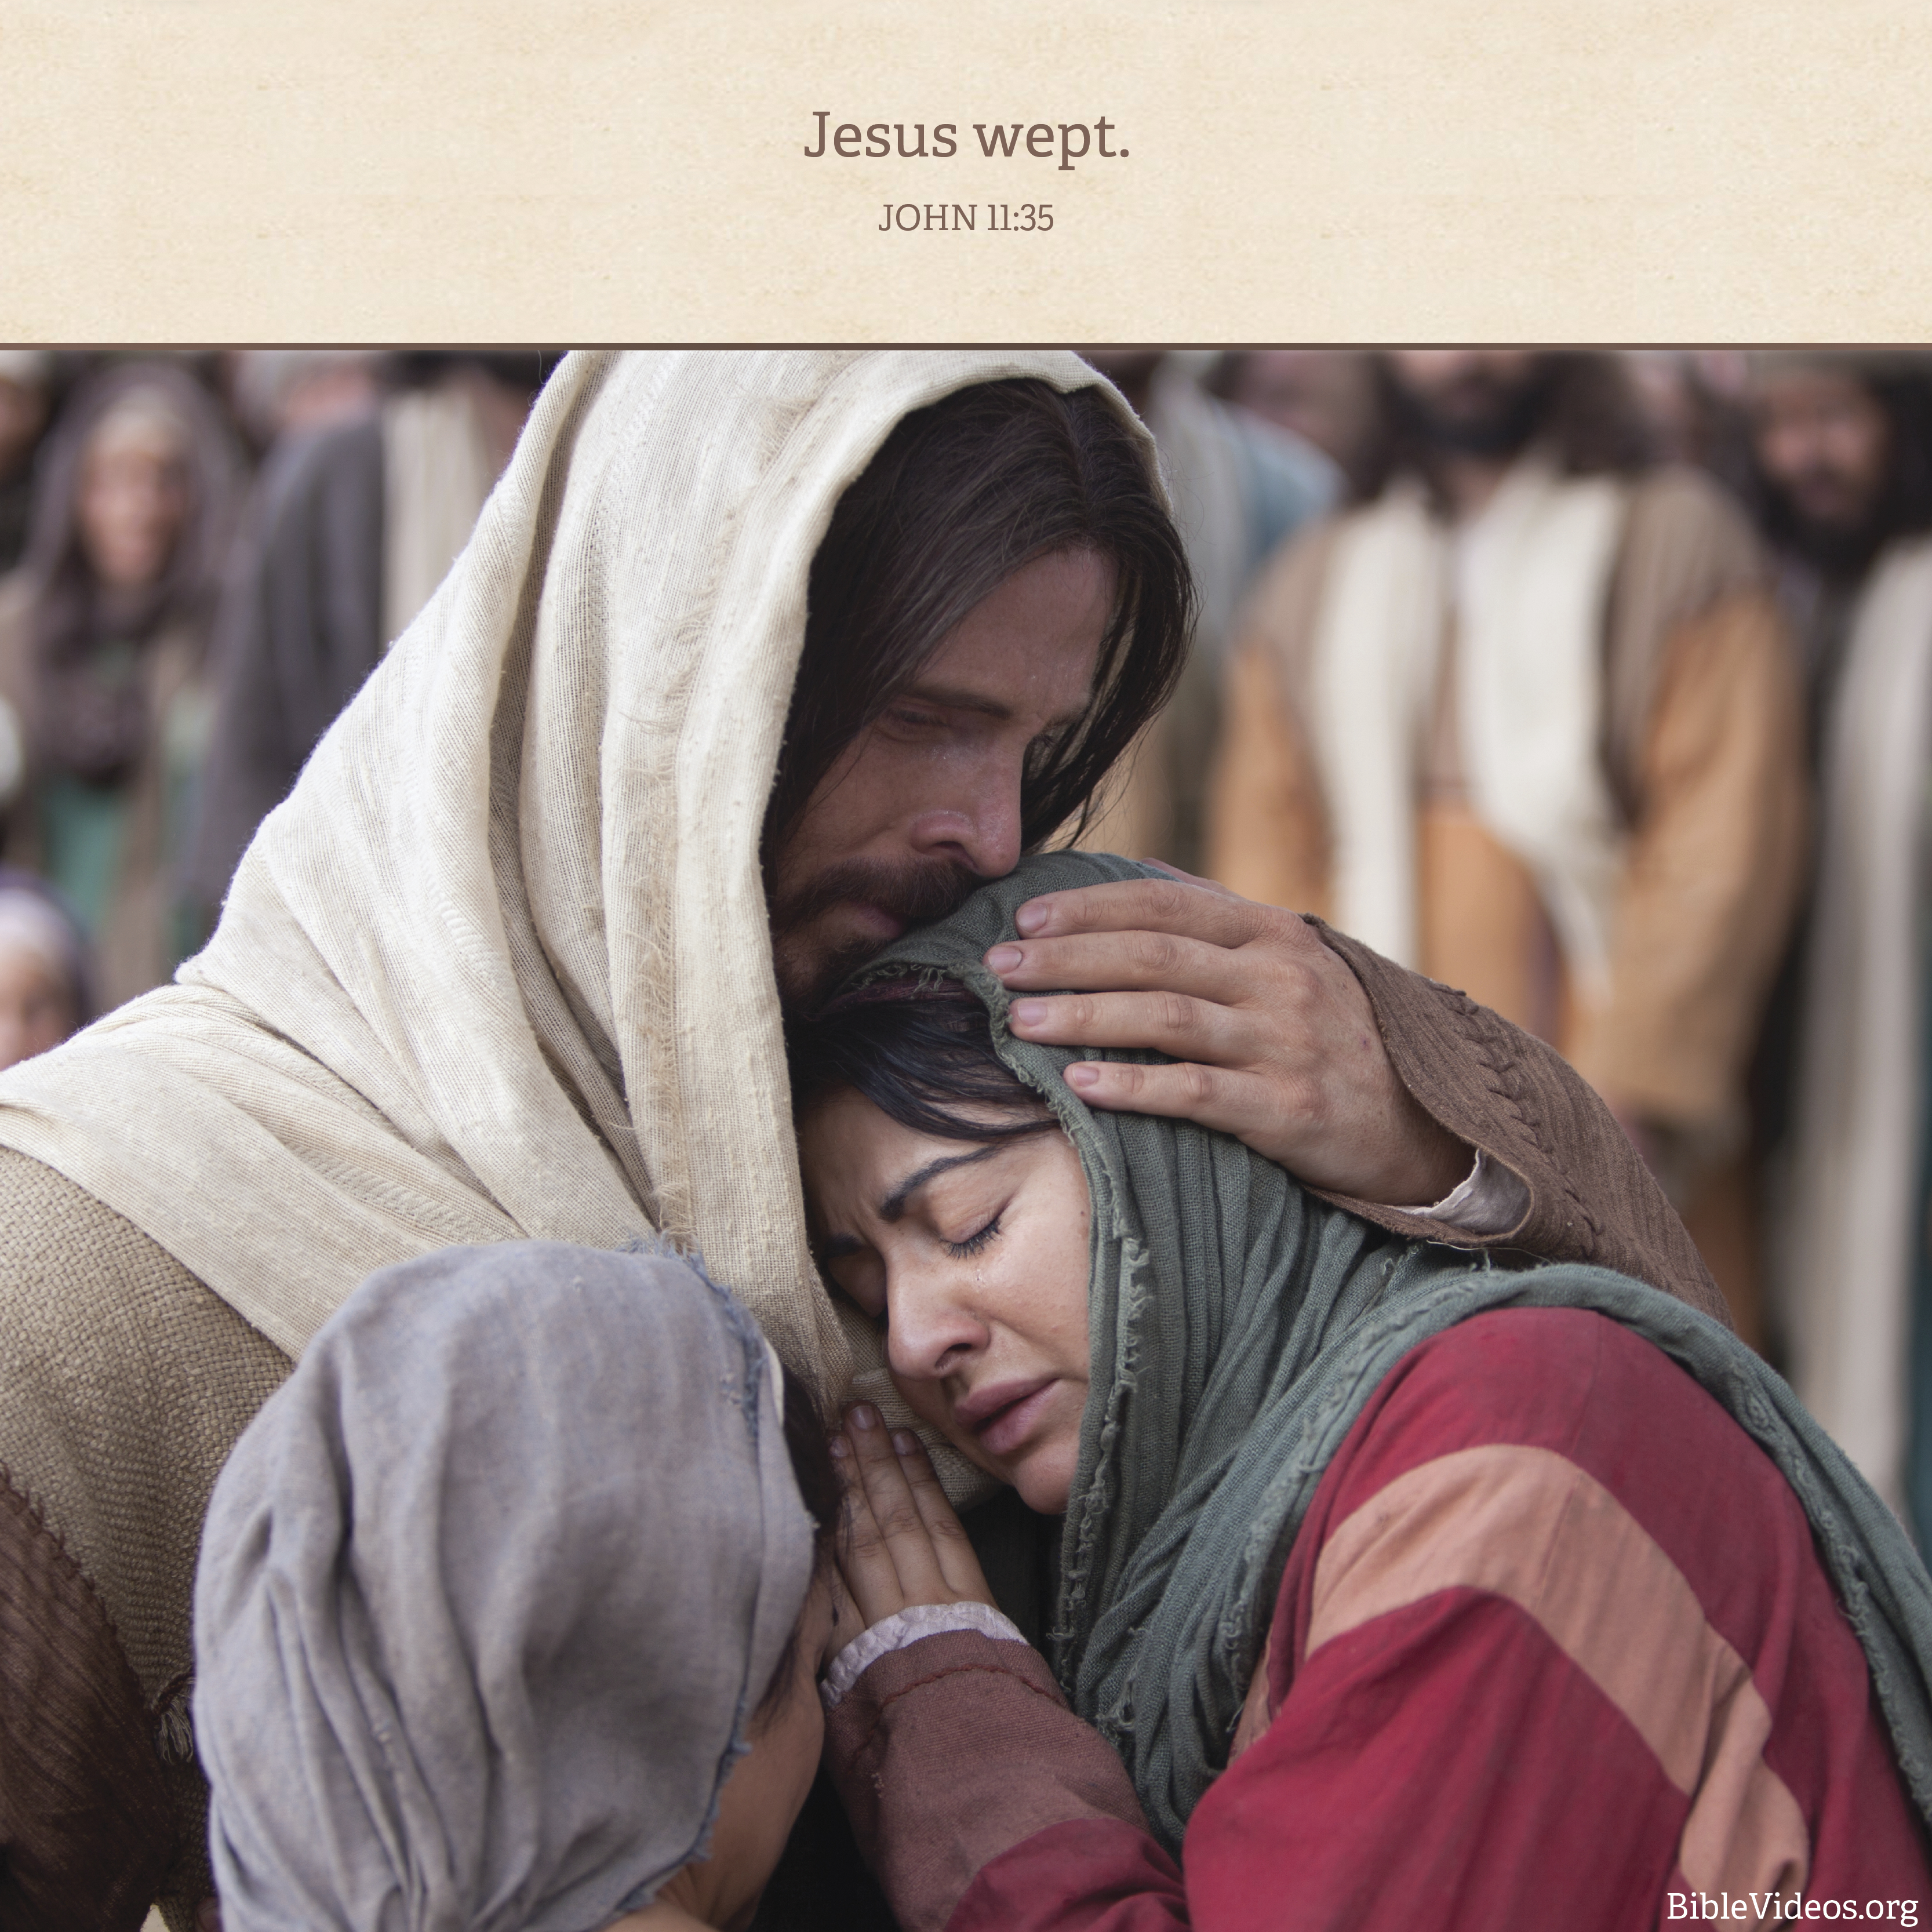 “Jesus wept.”—John 11:35